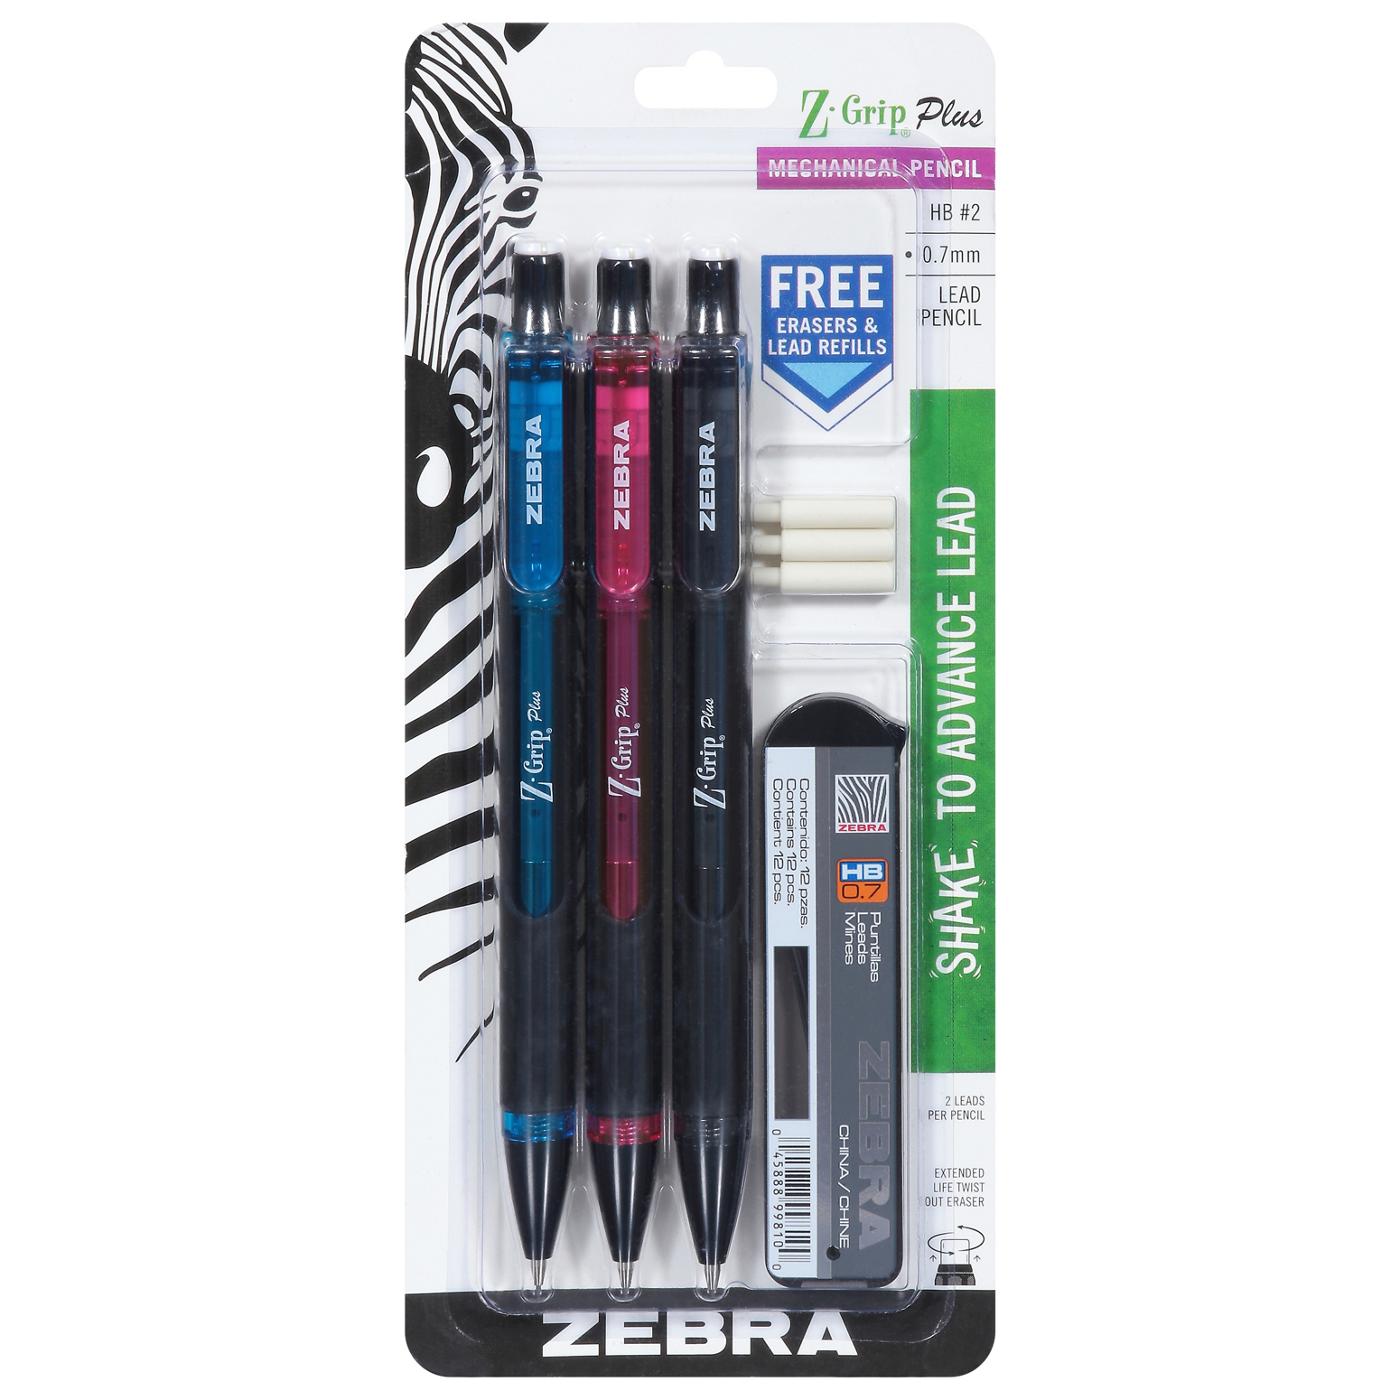 Zebra Z-Grip Plus 0.7mm Mechanical Pencils; image 1 of 2